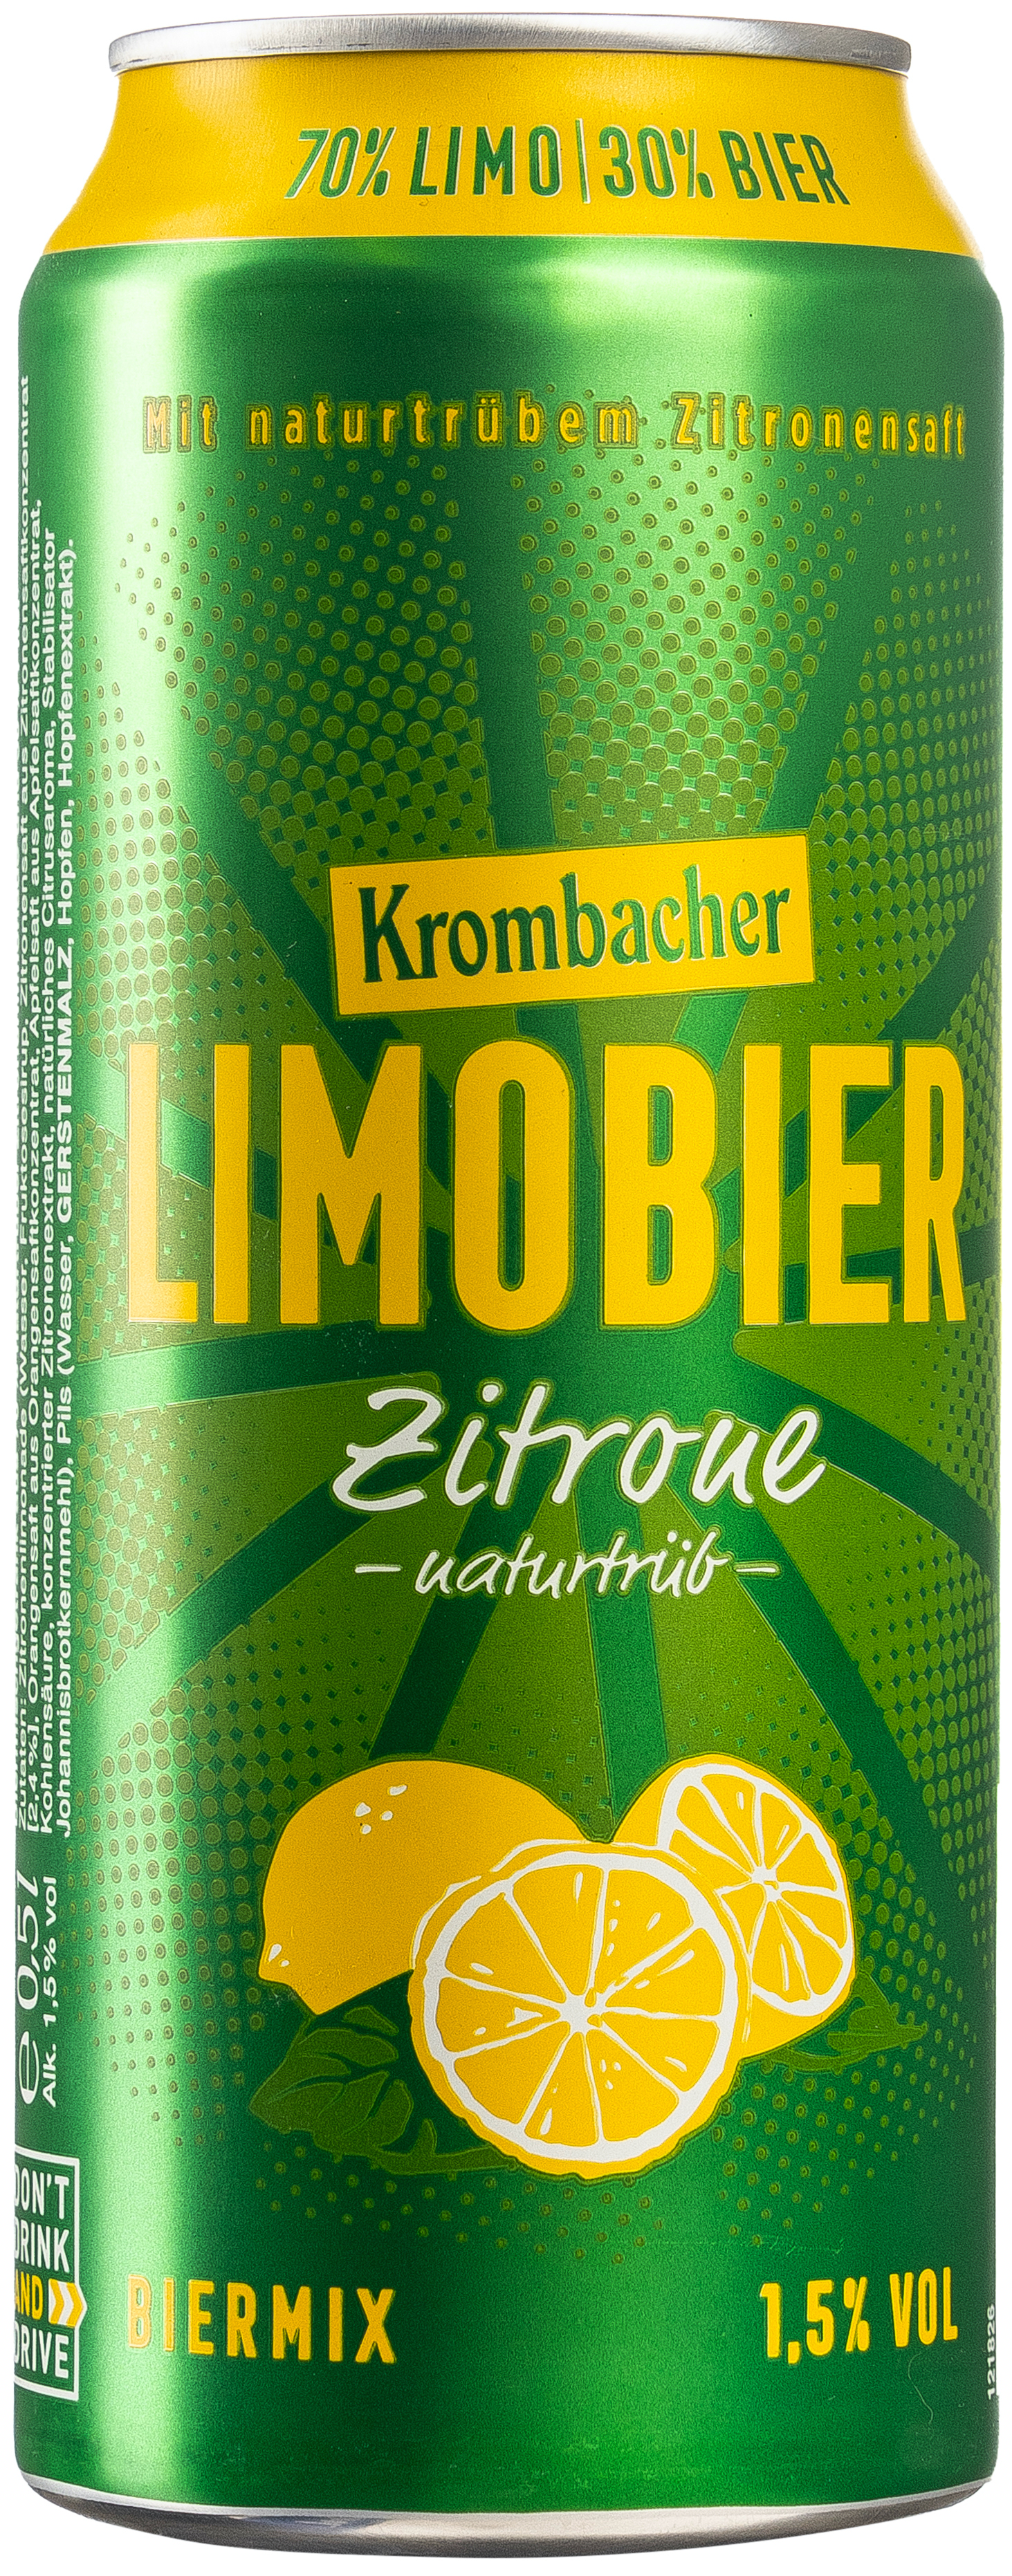 Krombacher Limobier Zitrone 0,5L EINWEG